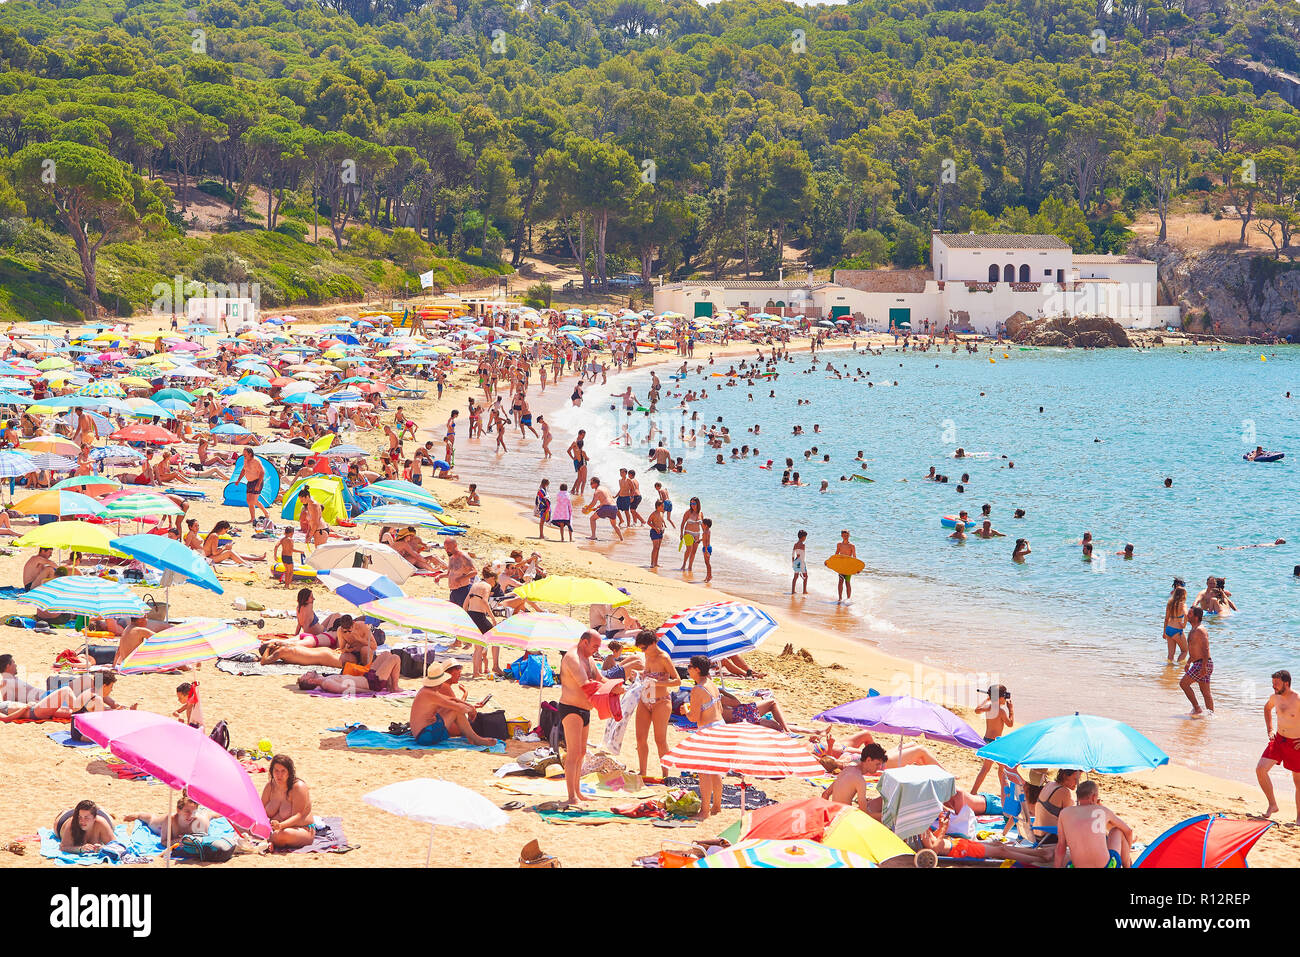 People enjoying a sunbathing in Castell beach of Palamos, Girona, Catalonia, Spain. Stock Photo